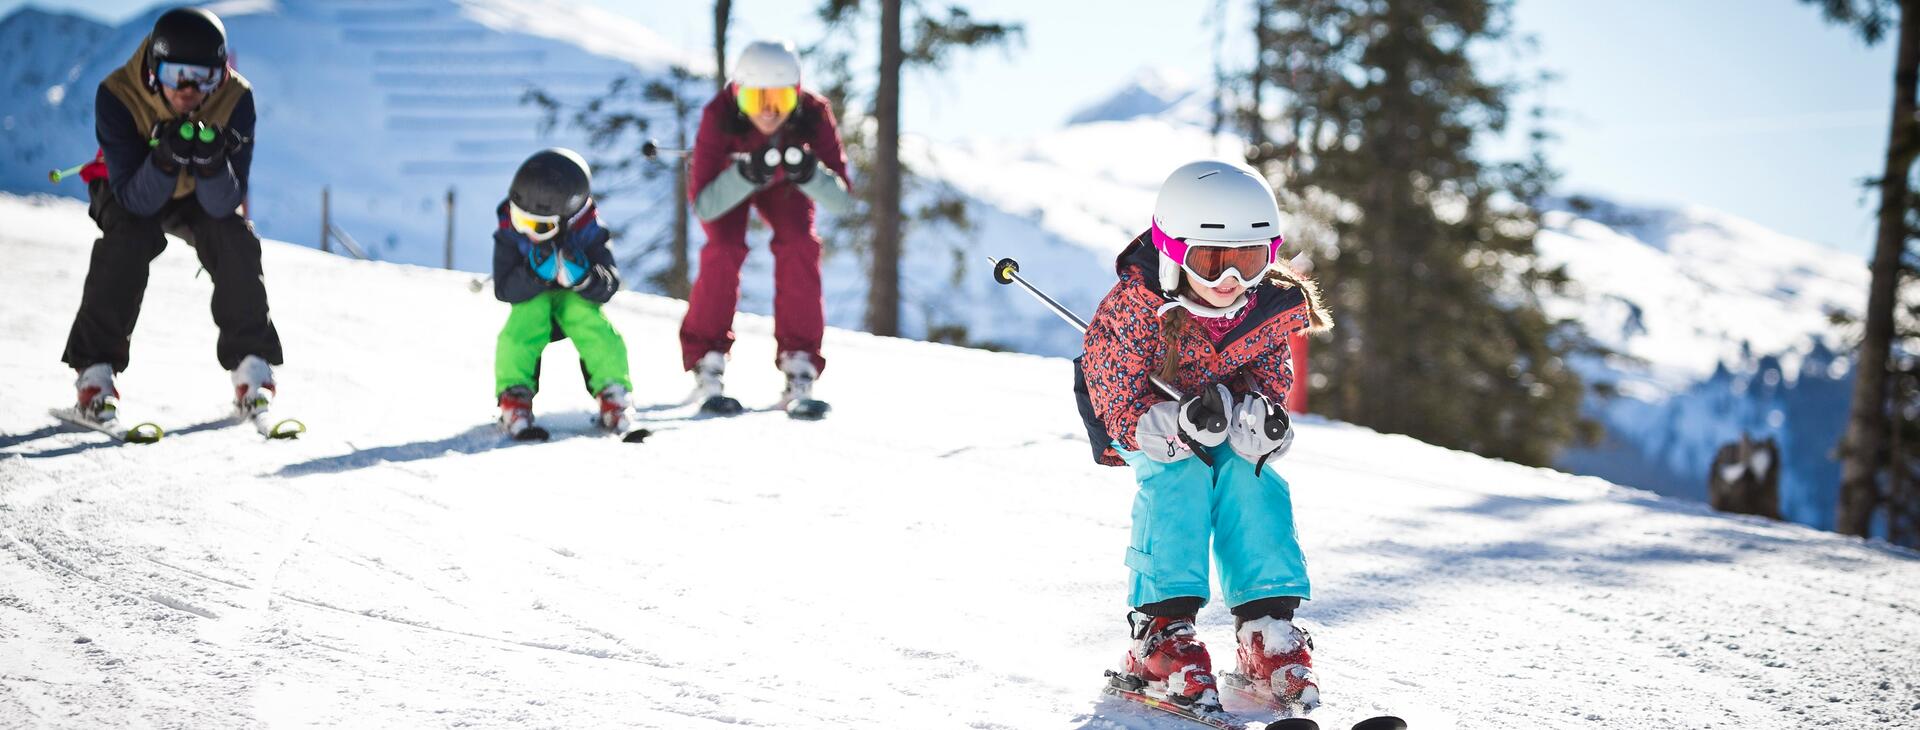 family skiing holiday ski resort Leogang